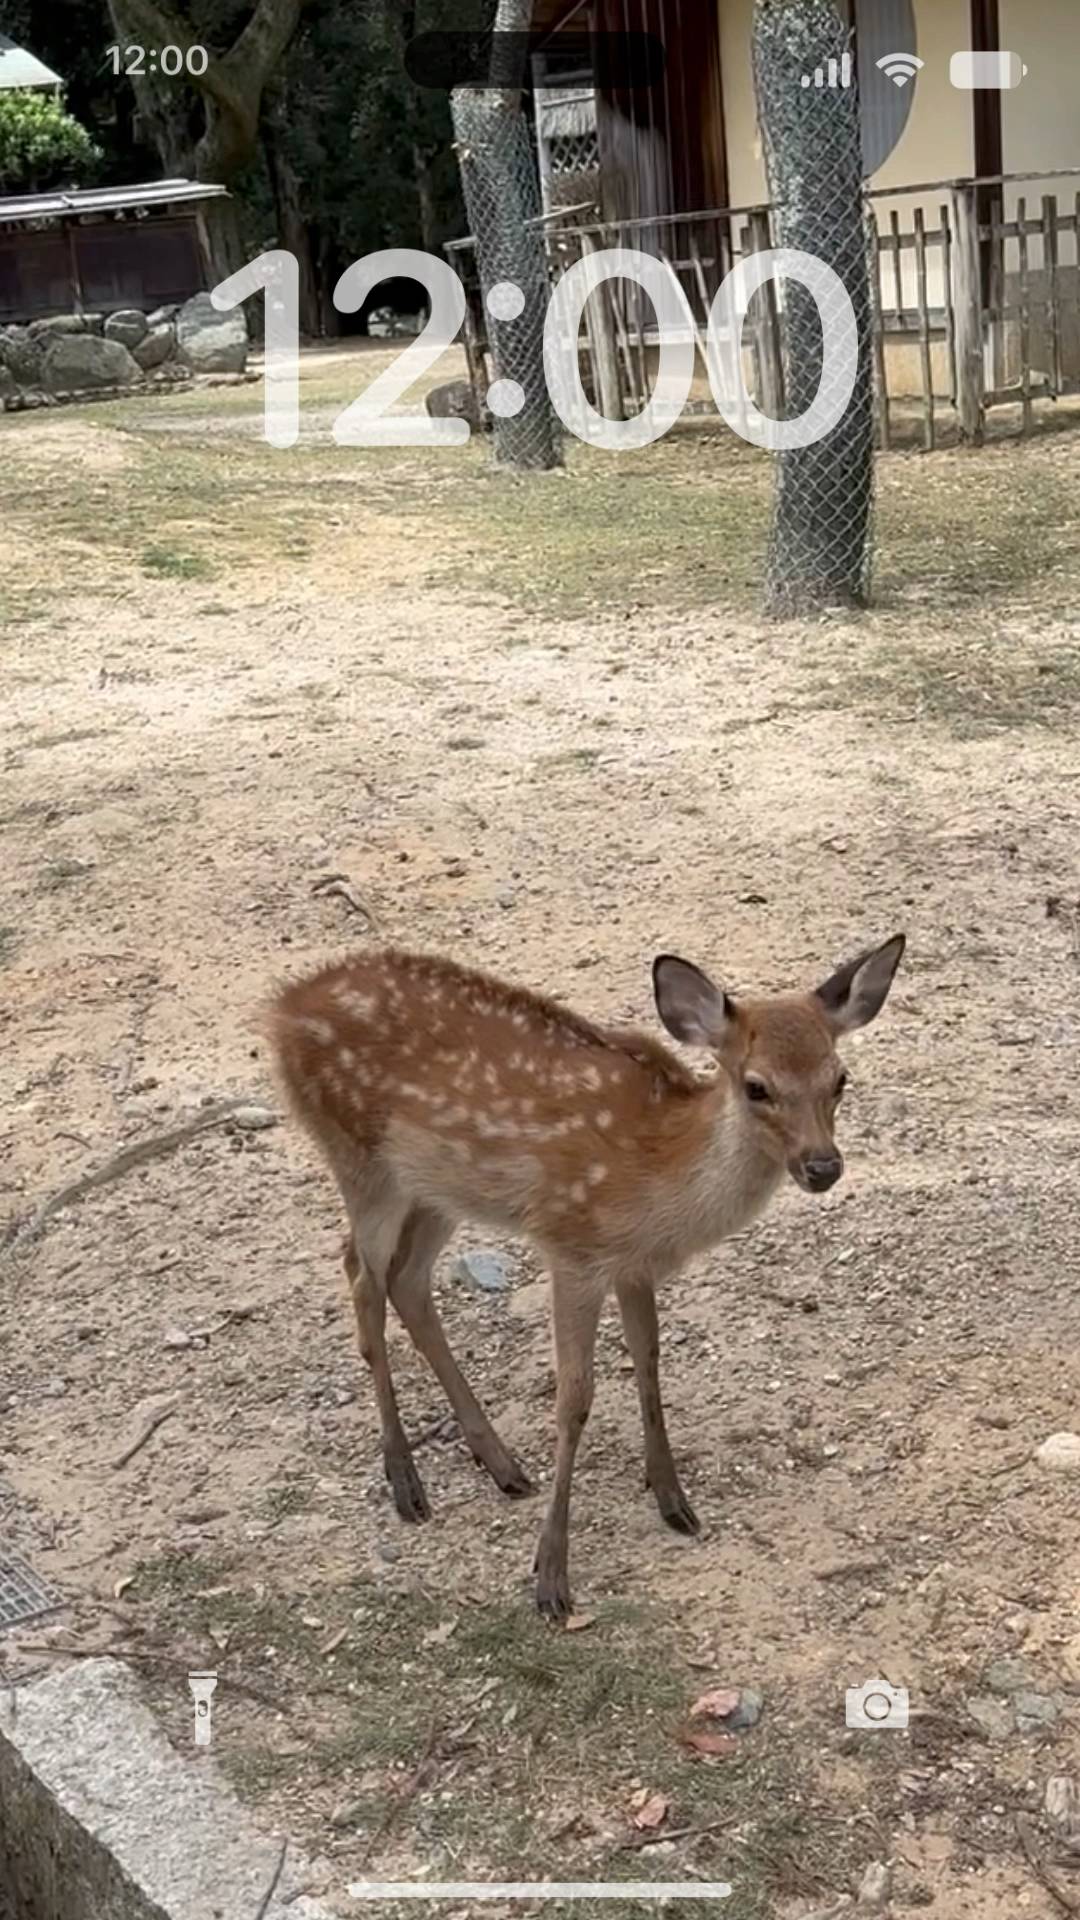 Nara cute deer 🦌🍁 Živá tapeta[ltE2WDsbyYP7yruGvDEu]